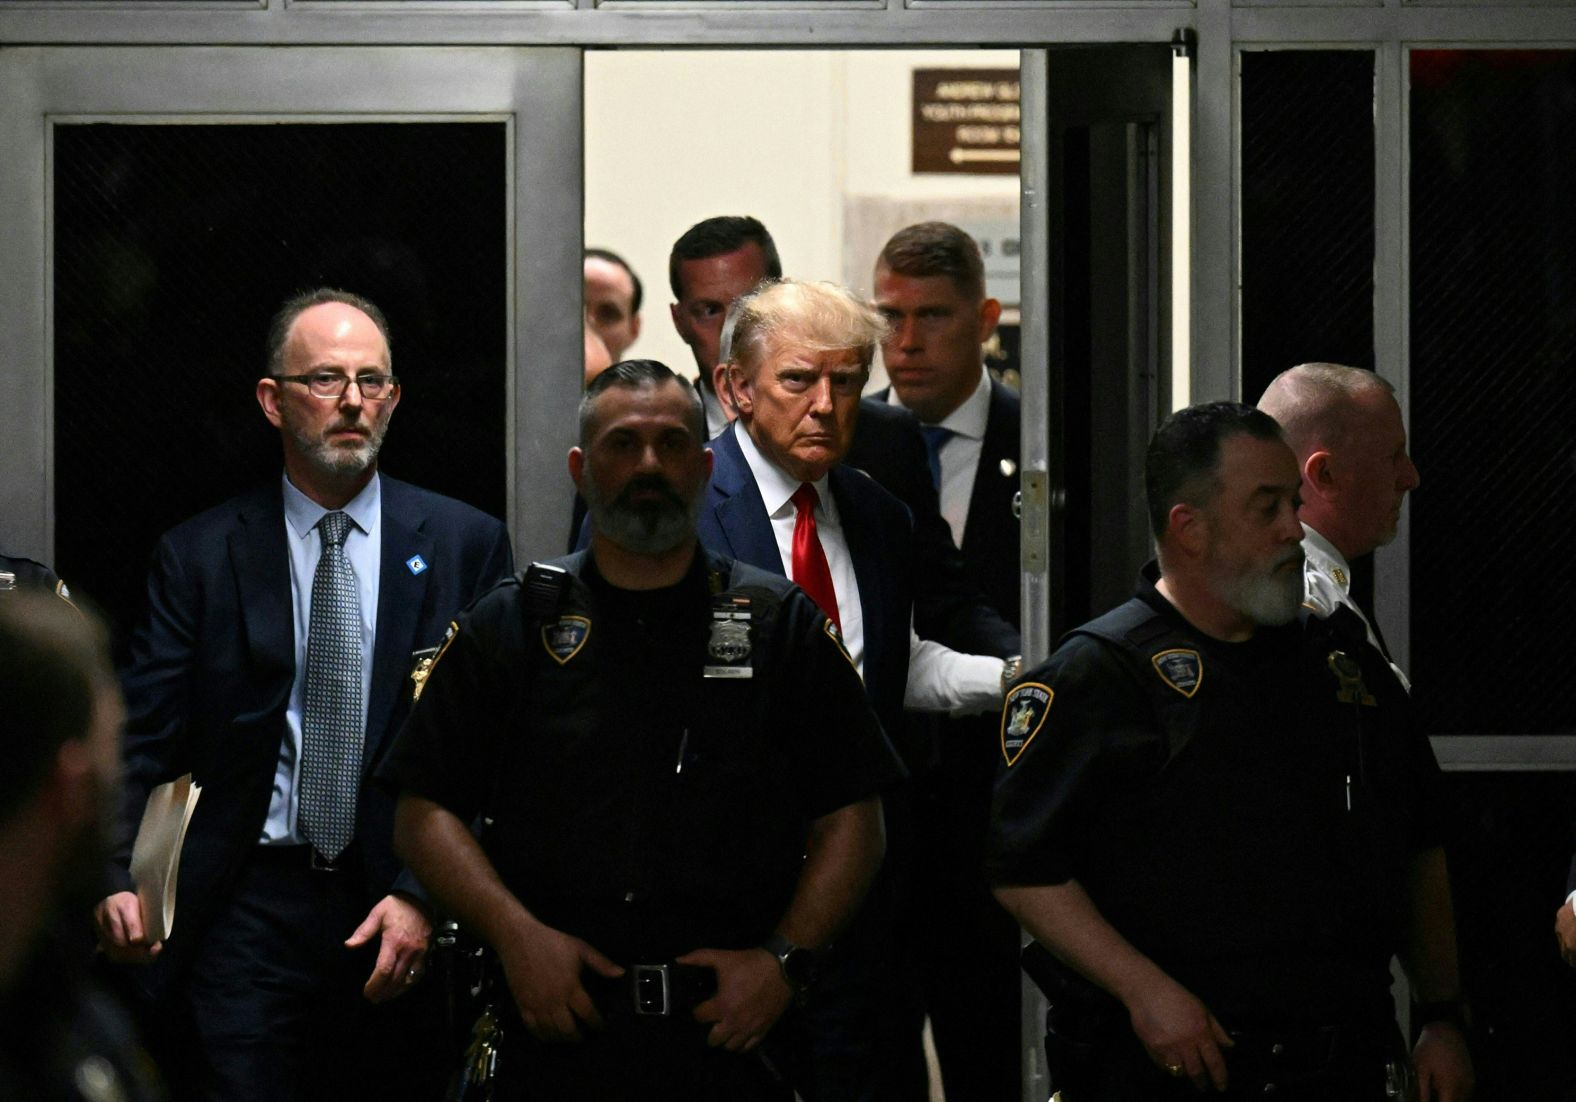 Trump walks through the courthouse on April 4.